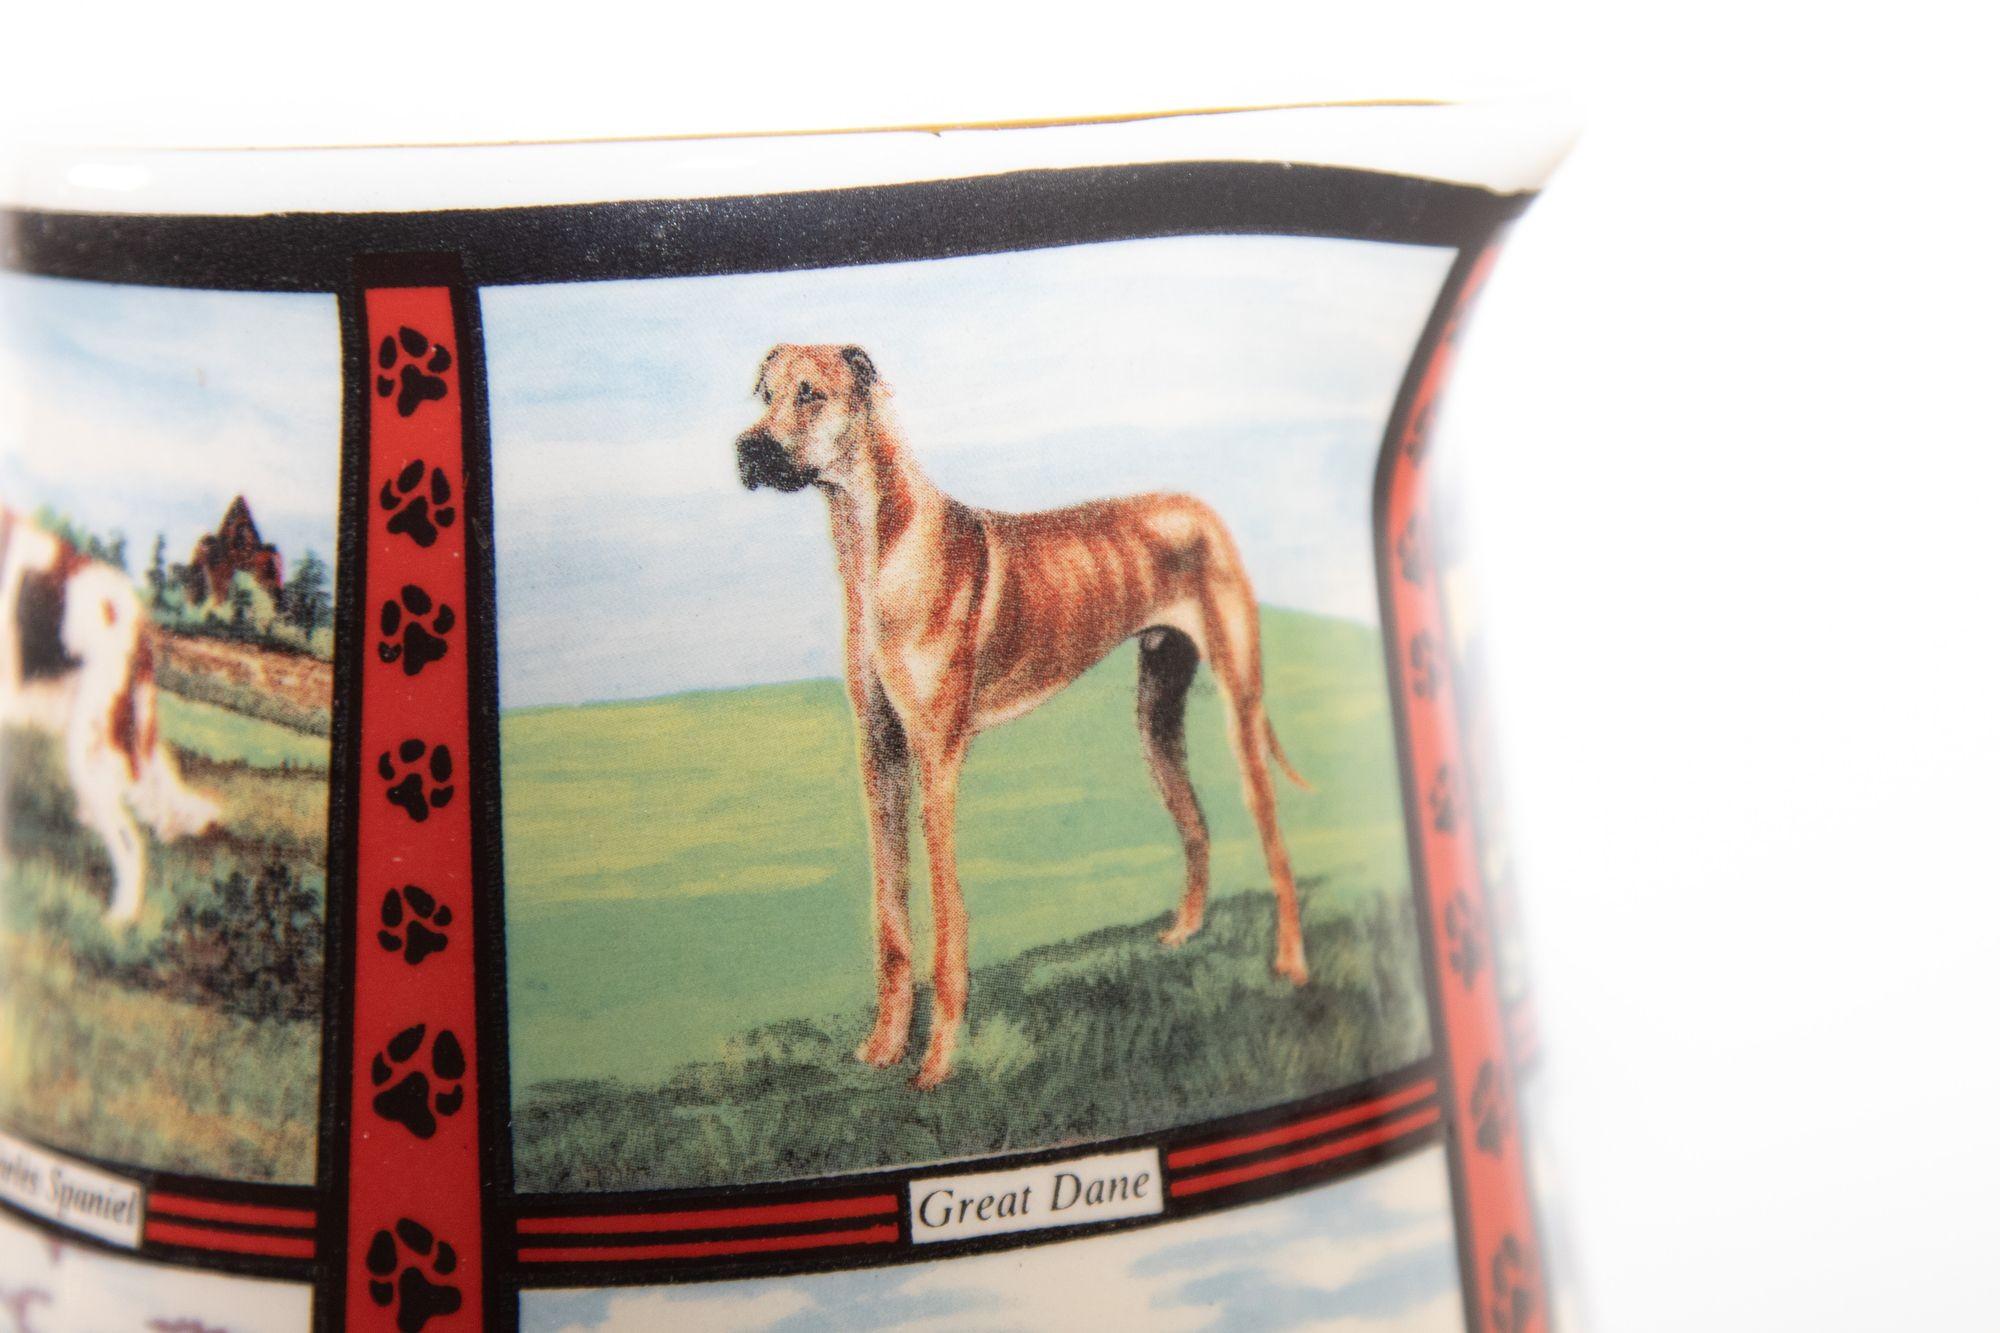 Vintage 1970s Ceramic Pitcher, Derbyshire England with Dog Breeds Pictures For Sale 2